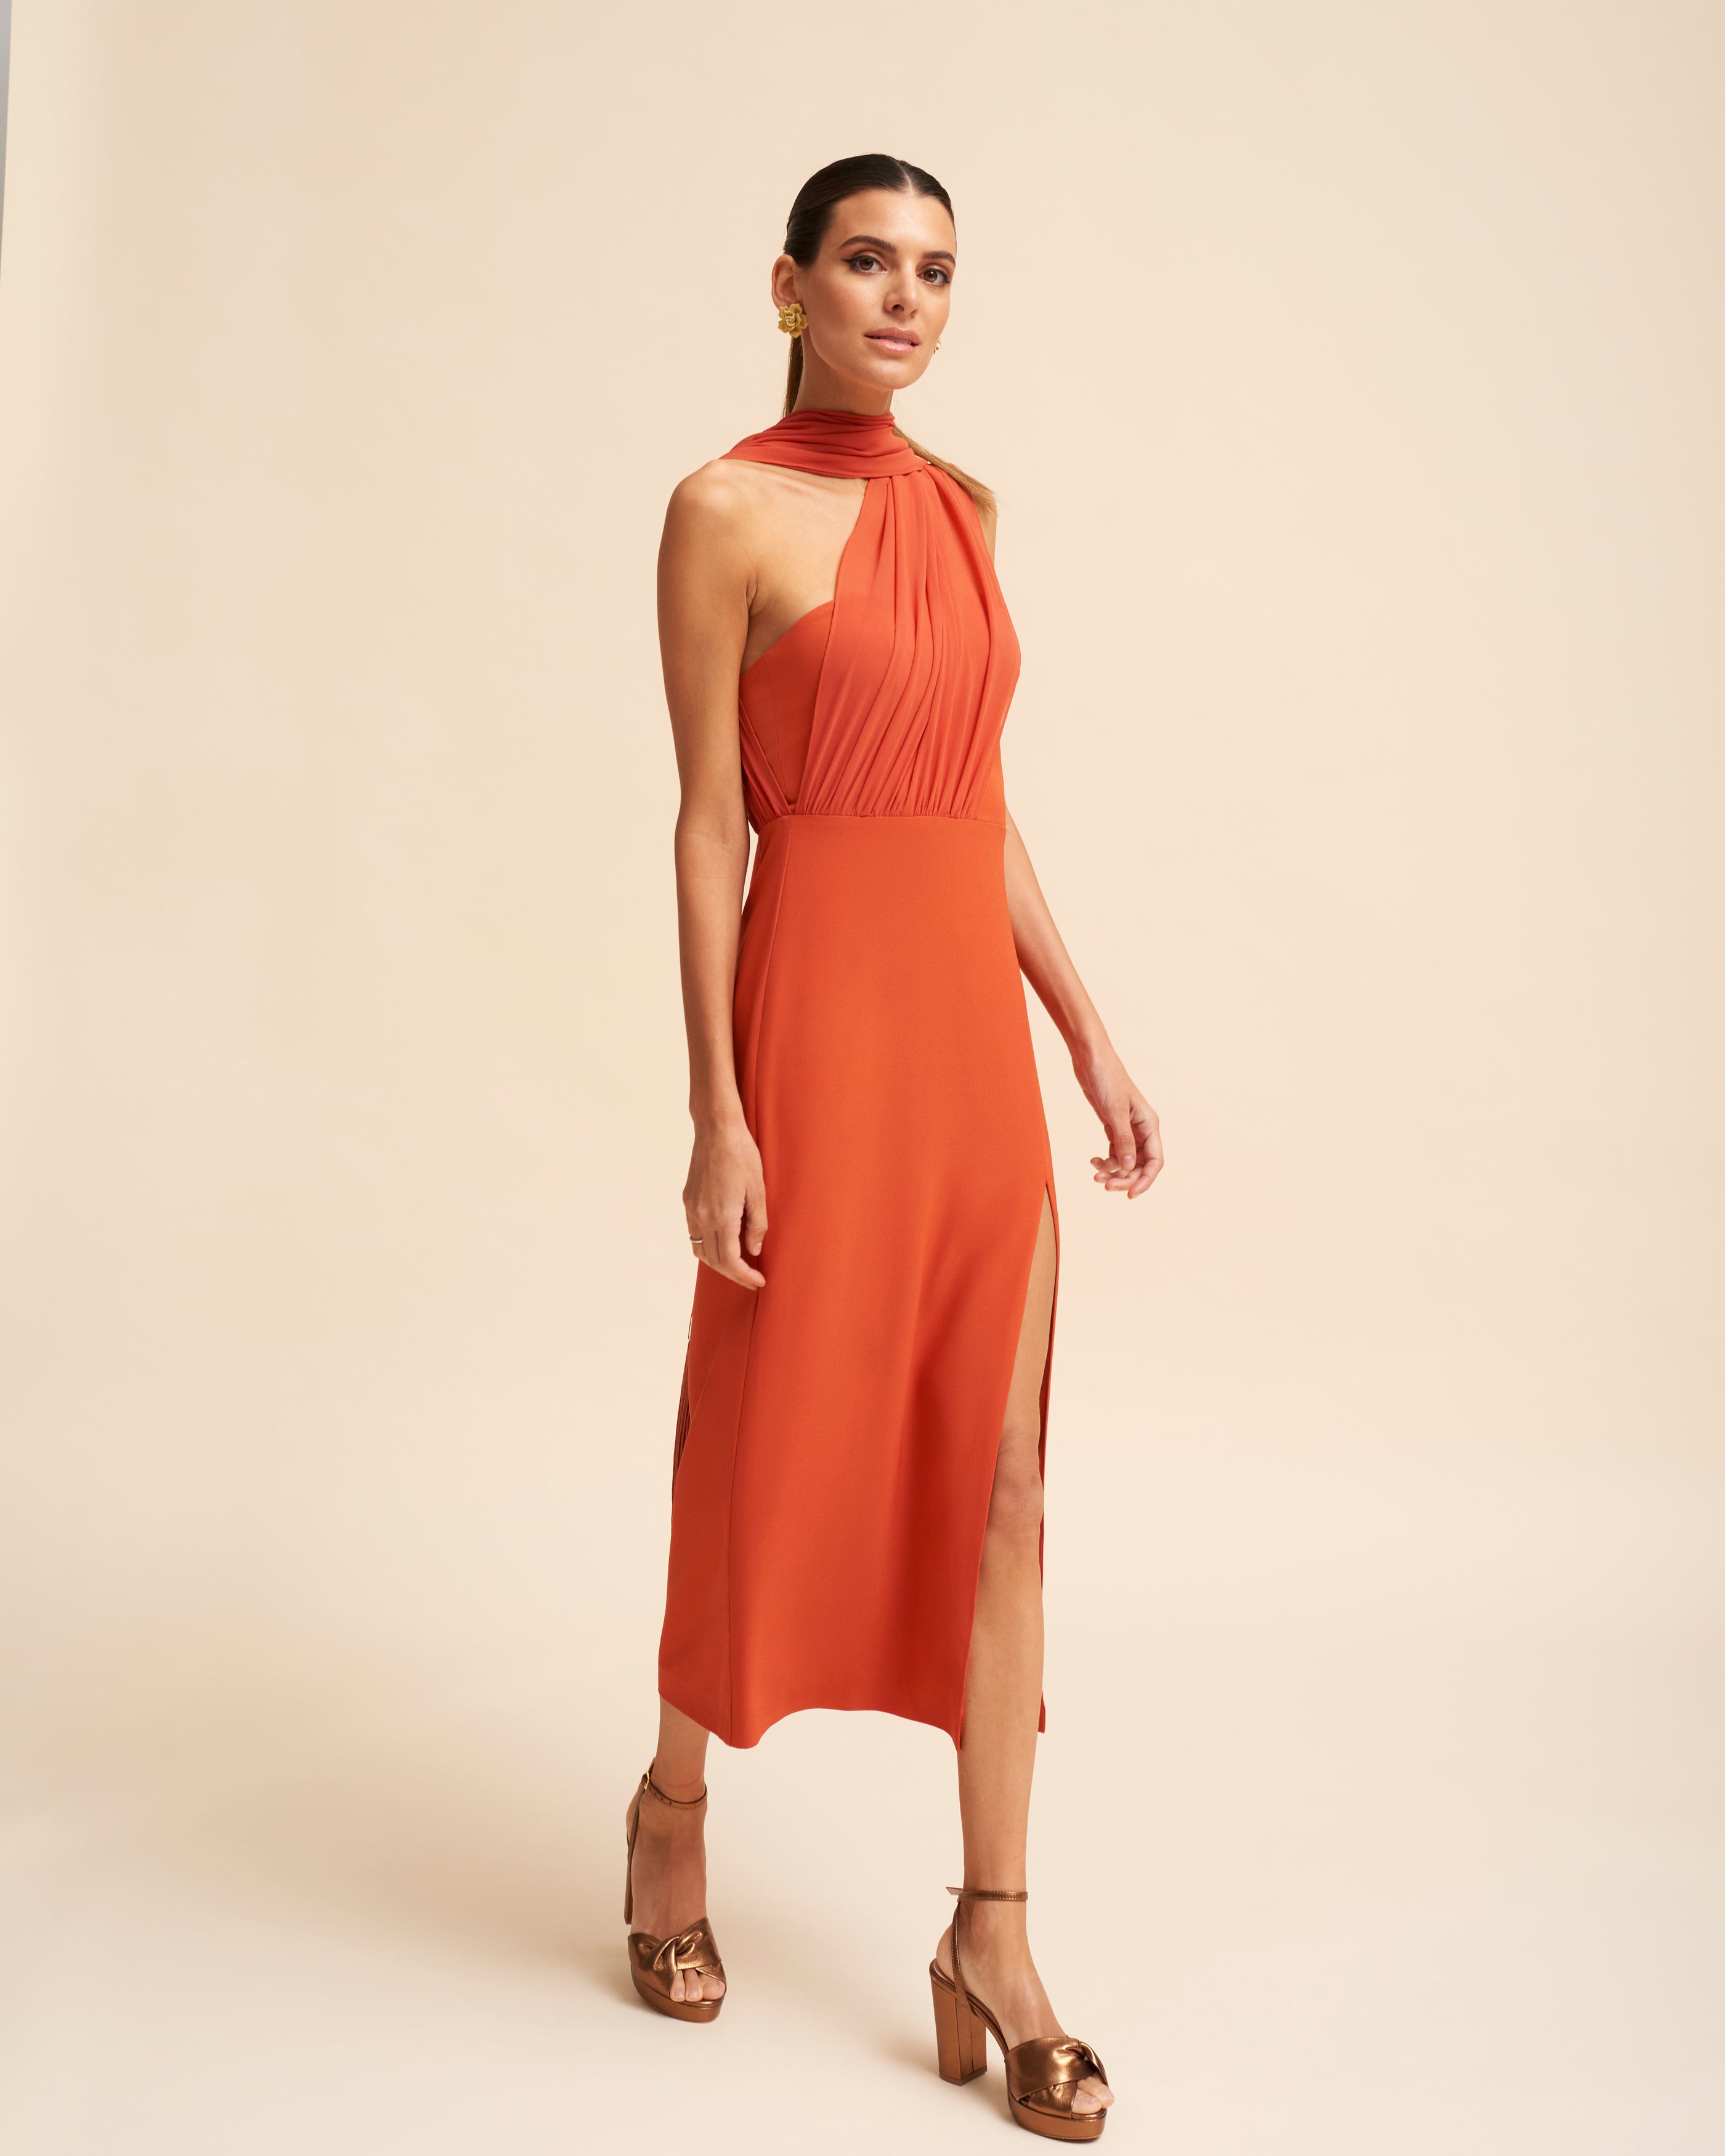 Copper Key Celebrate Rhinestone Platform Dress Sandals | Dillard's